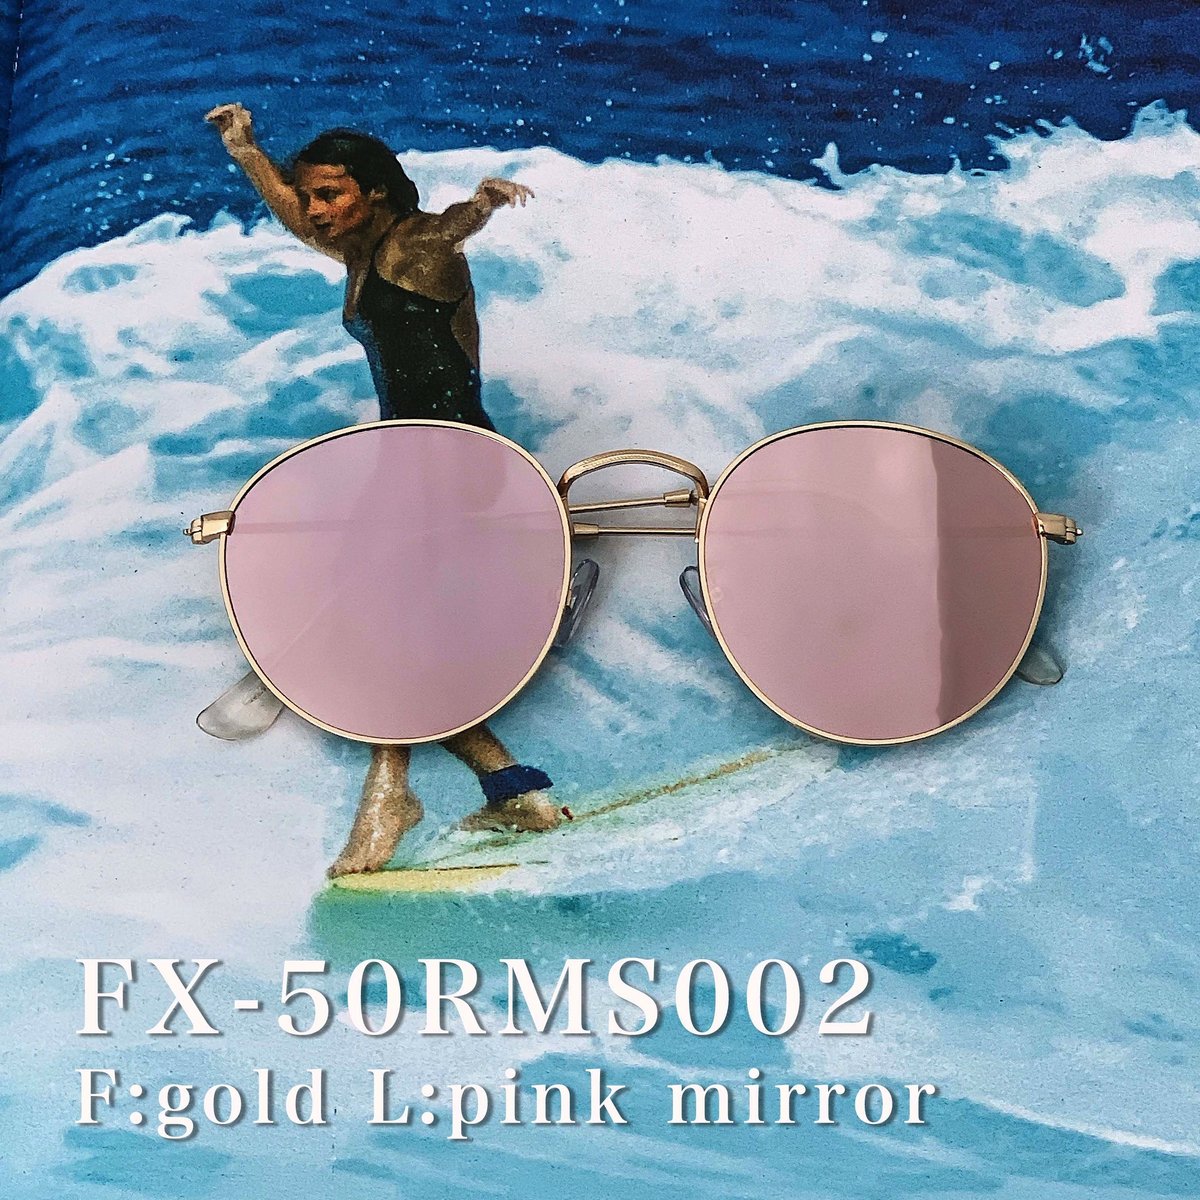 4colors】round metal mirror sunglasses -53mm- |